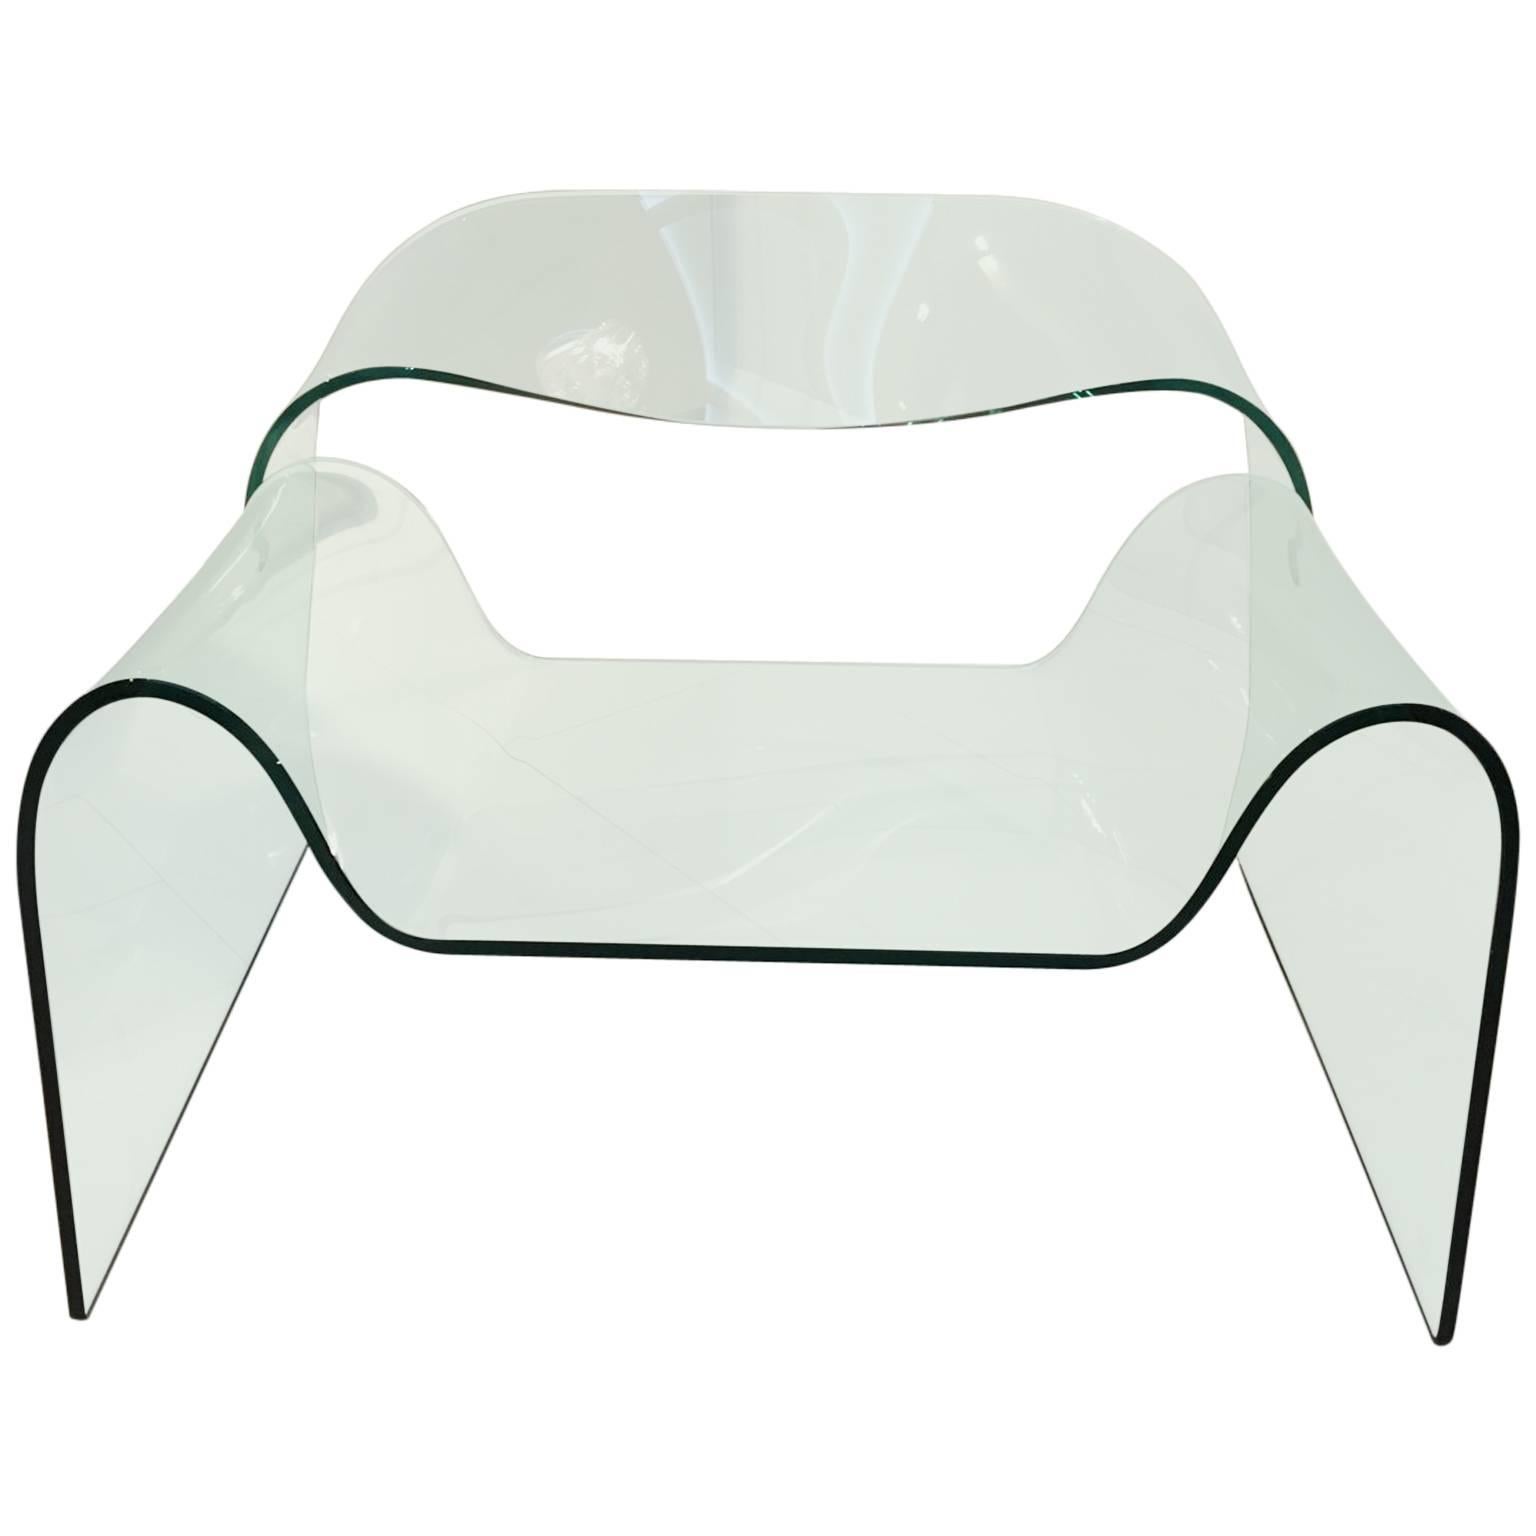 Sculptural Ghost Glass Armchair Chair Designed by Cini Boeri for Fiam Italia